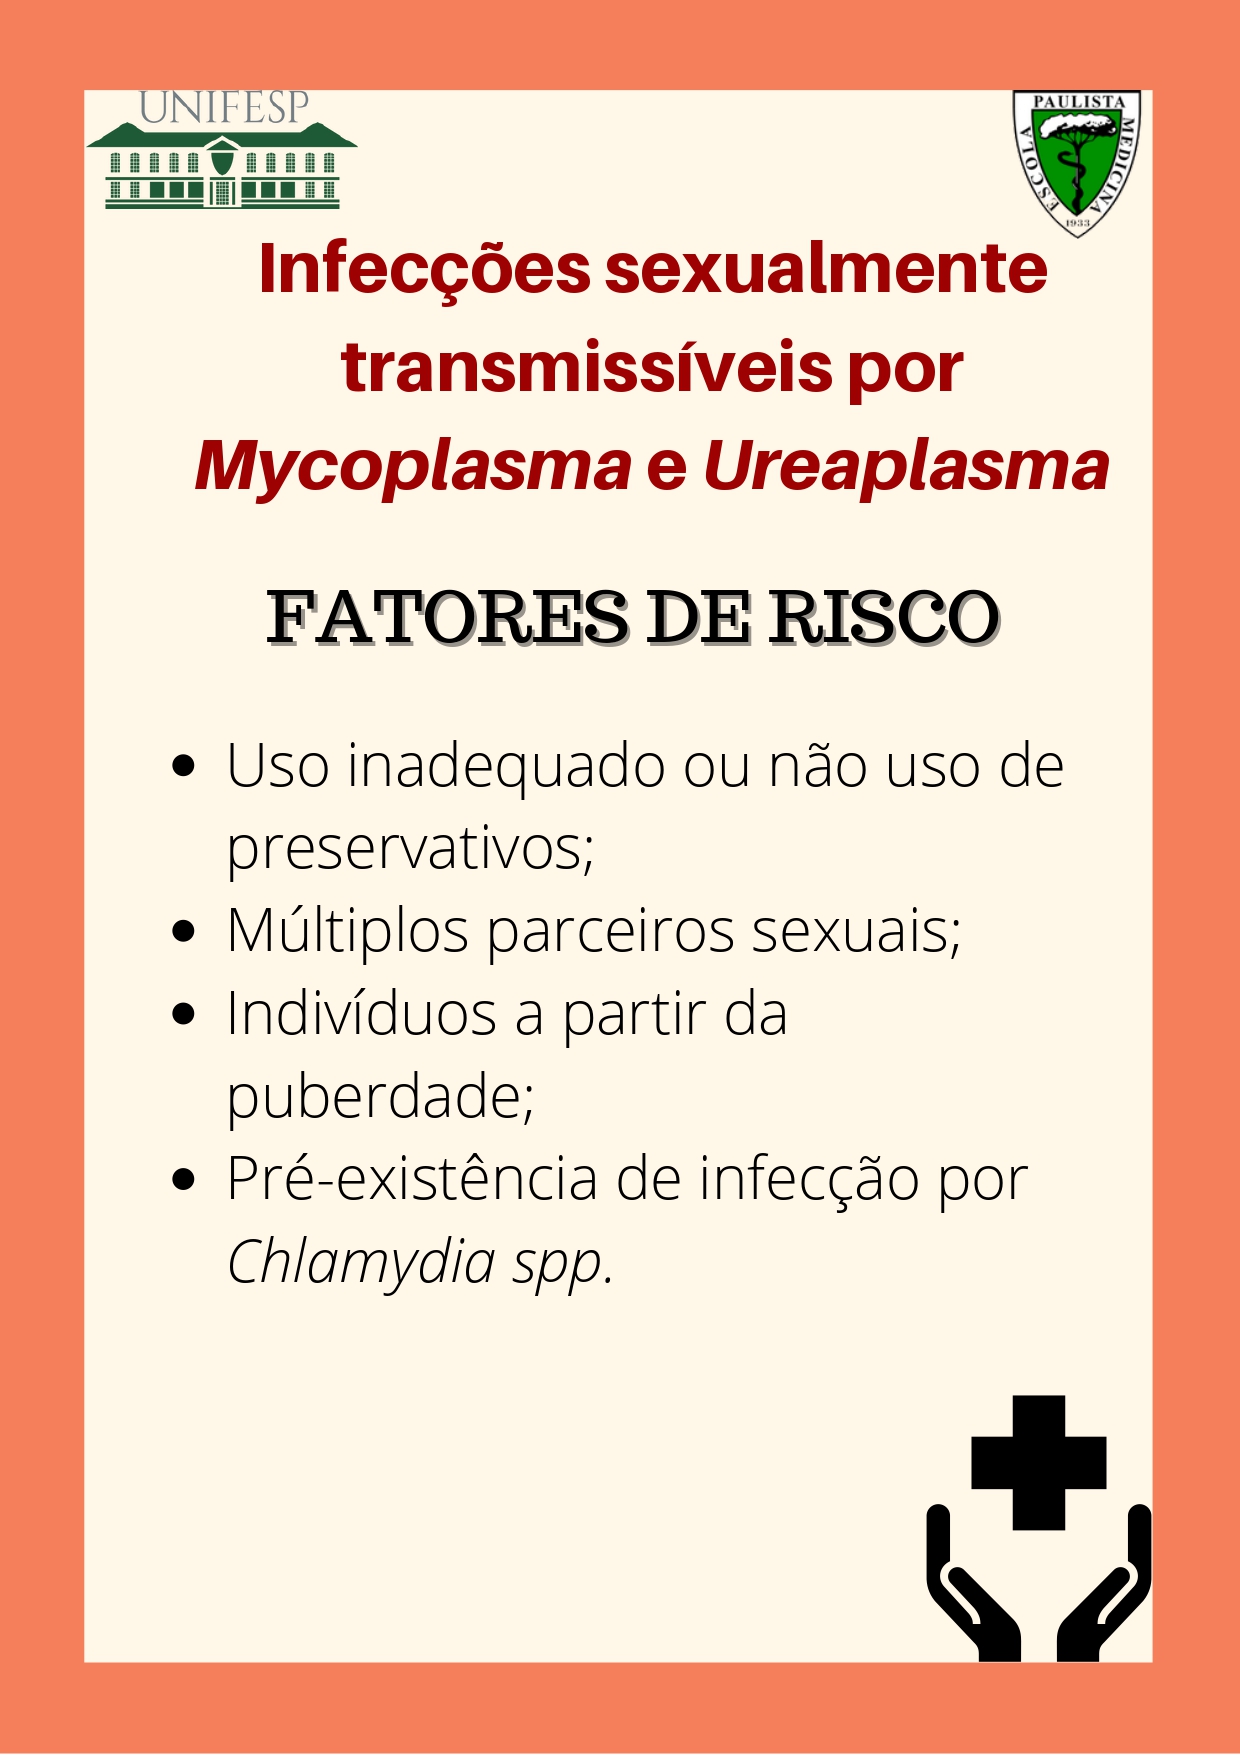 Mycoplasma e Ureaplasma page 0005